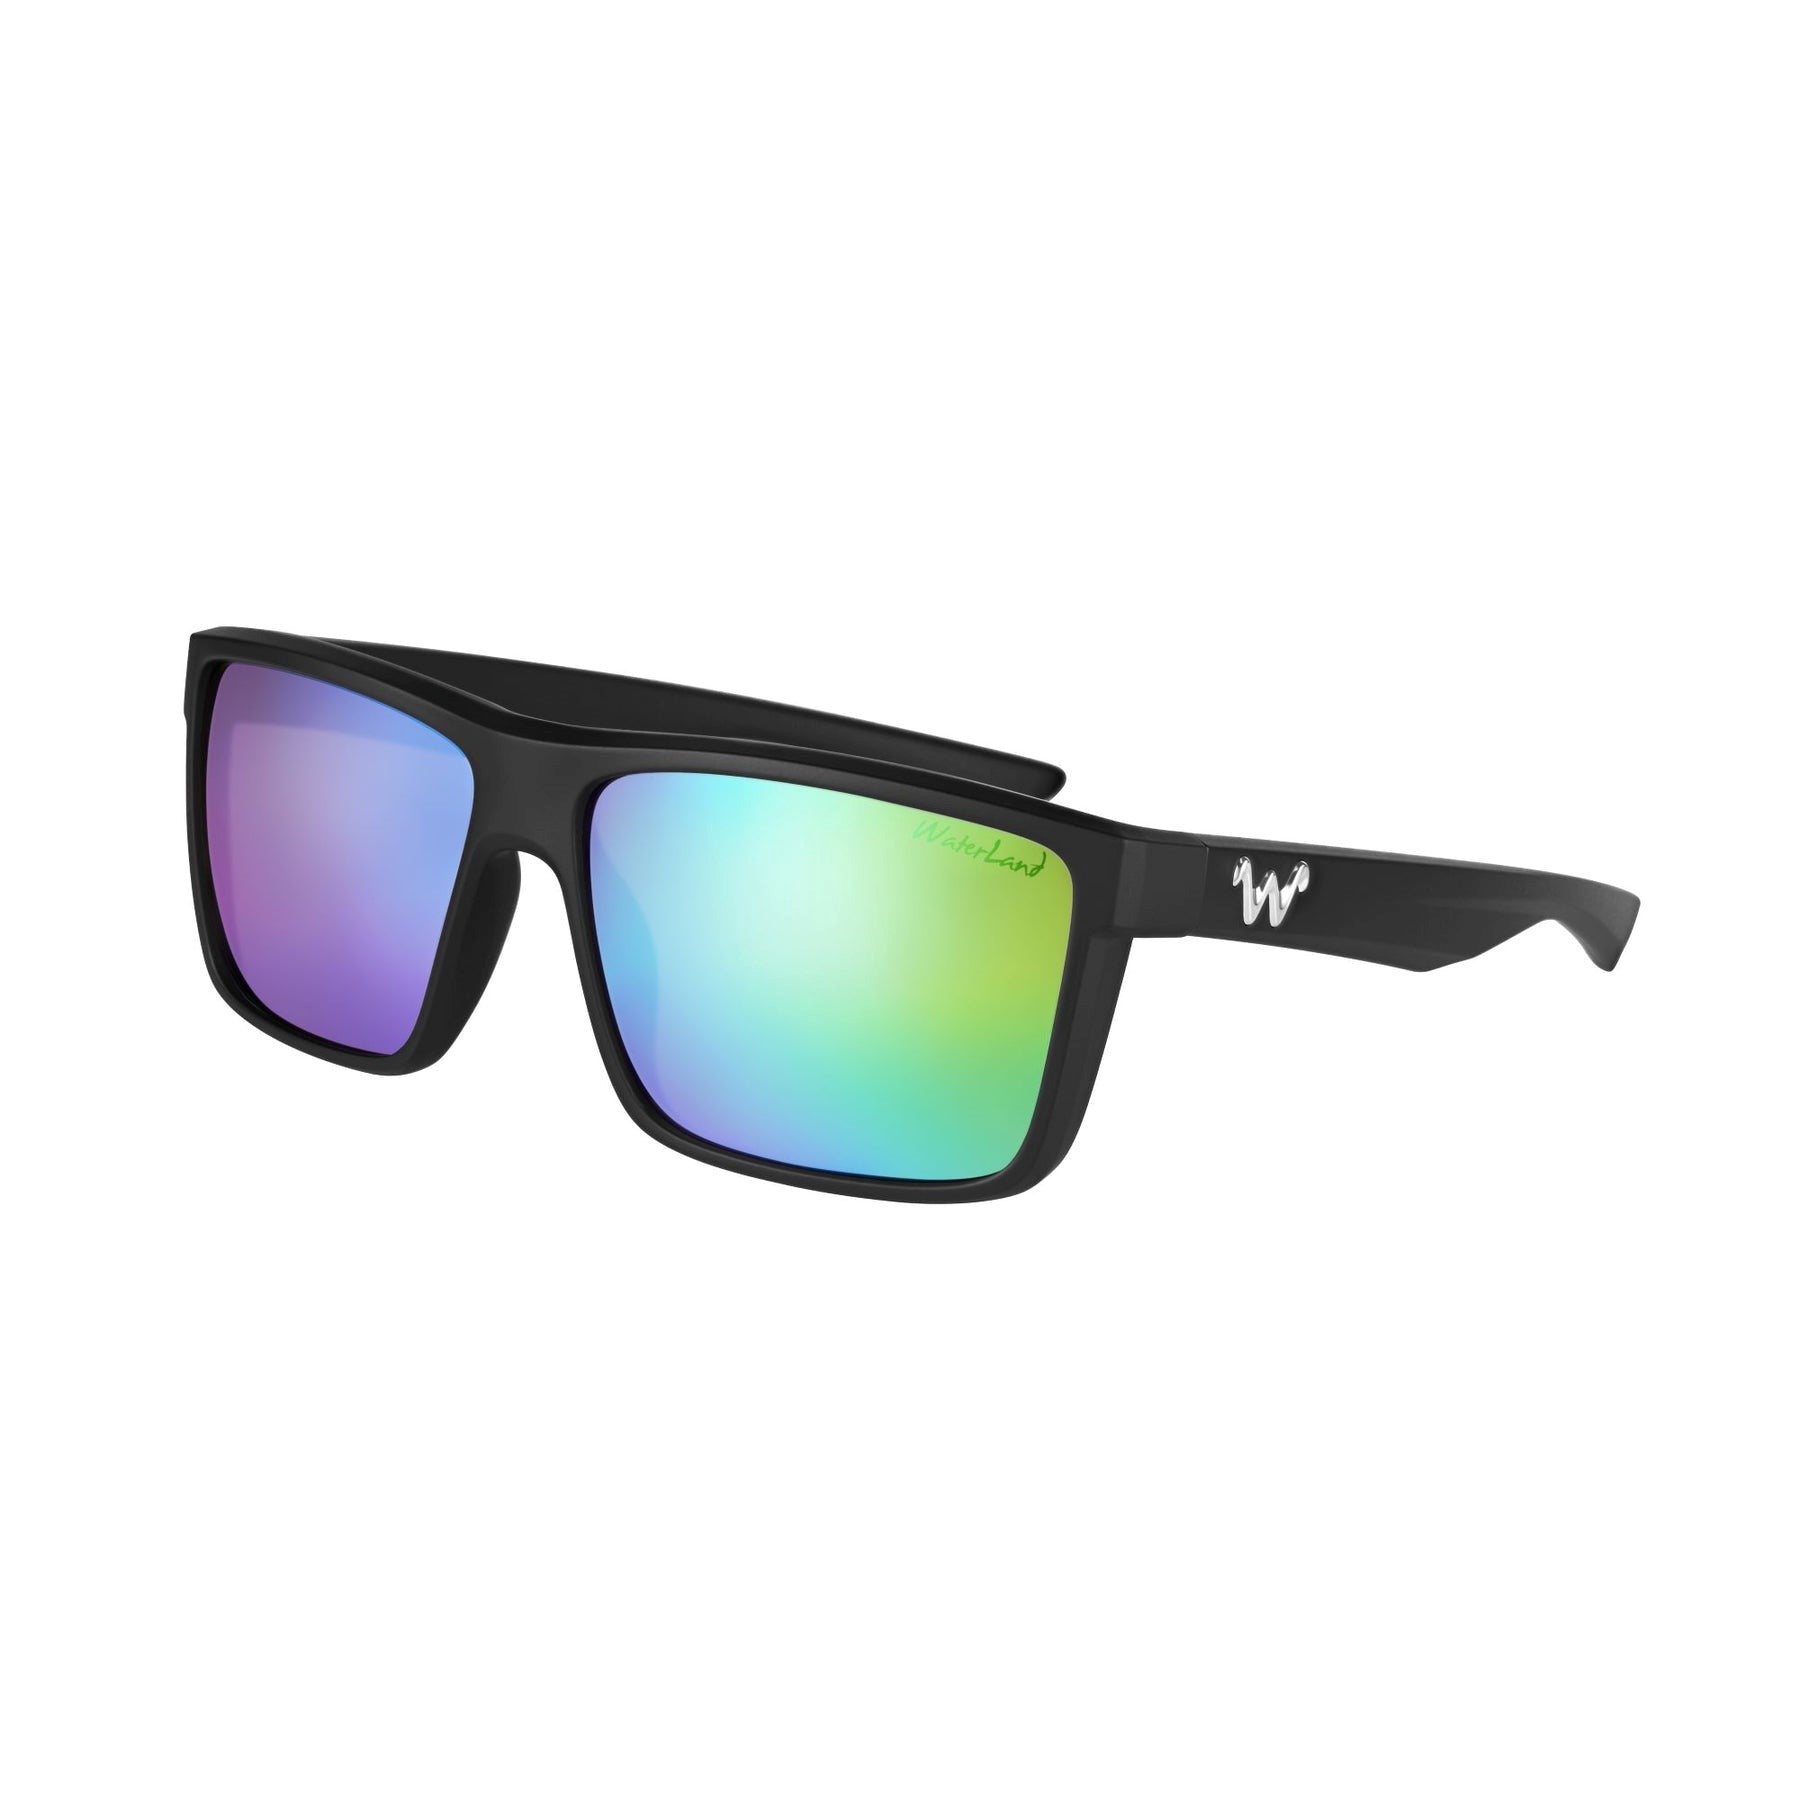 Waterland Slaunch Polarized Sunglasses